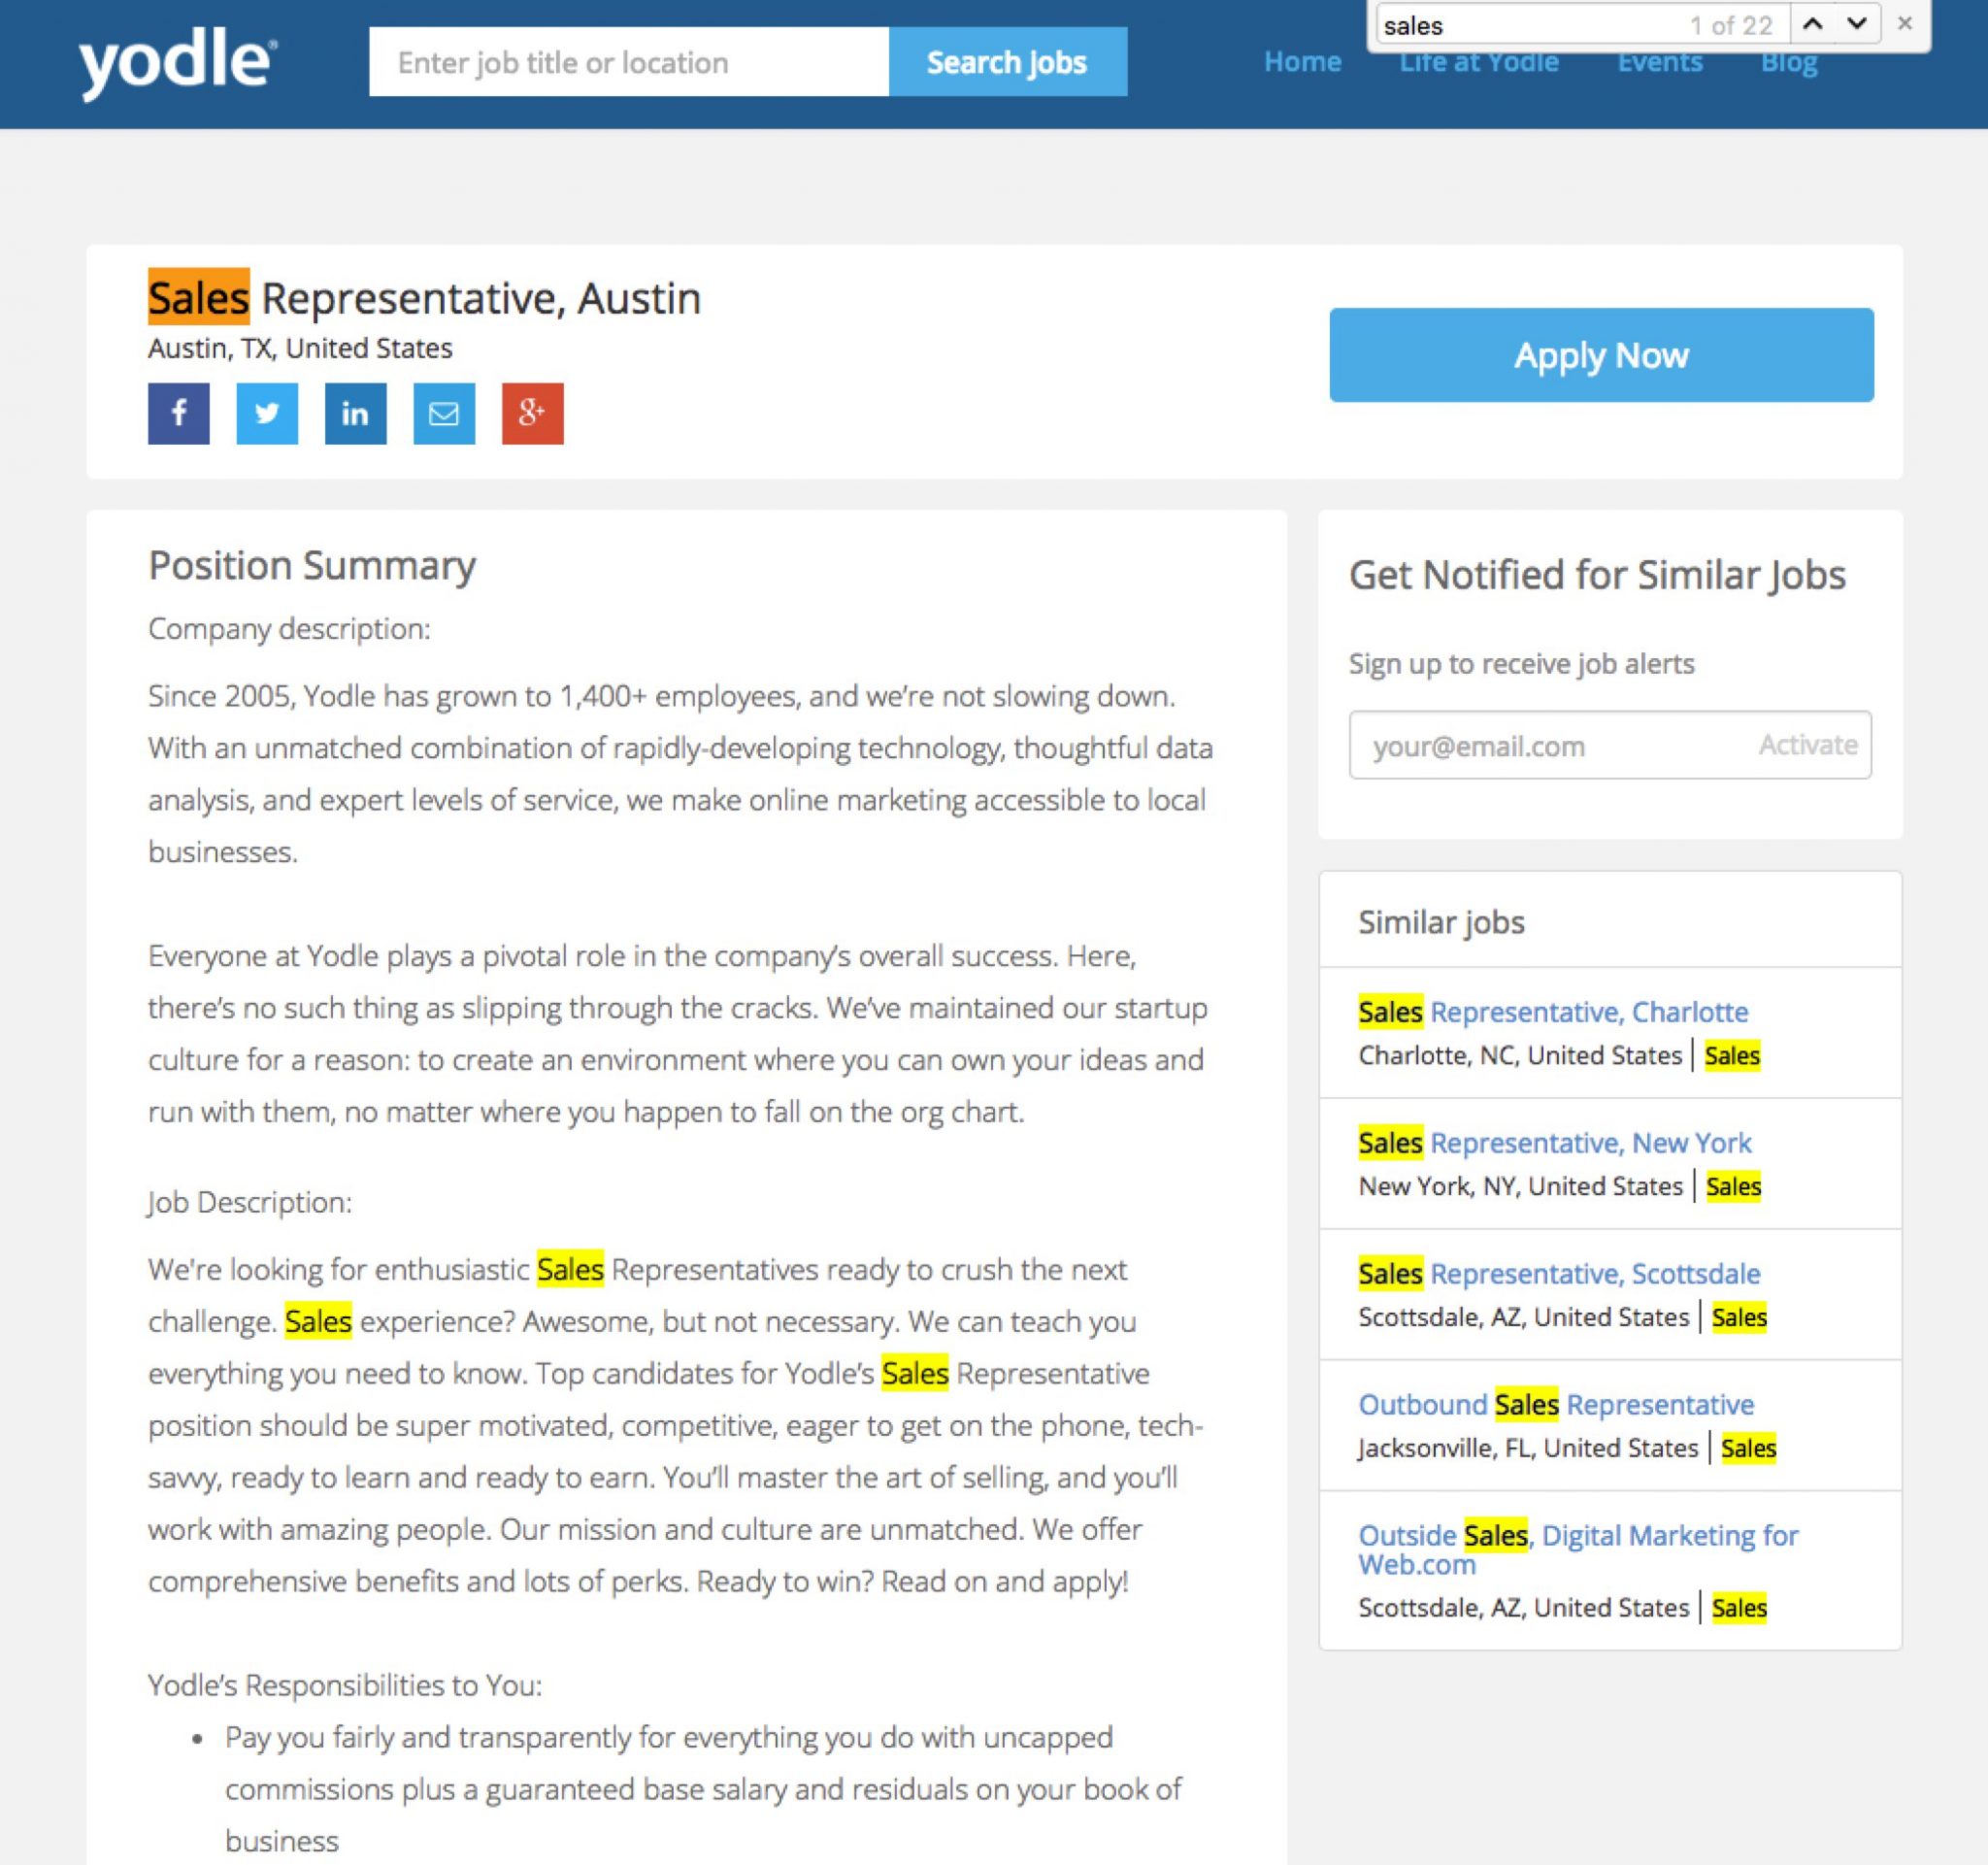 Recruitment-SEO-yodle-sales-rep-job-description-p-1-ongig-blog